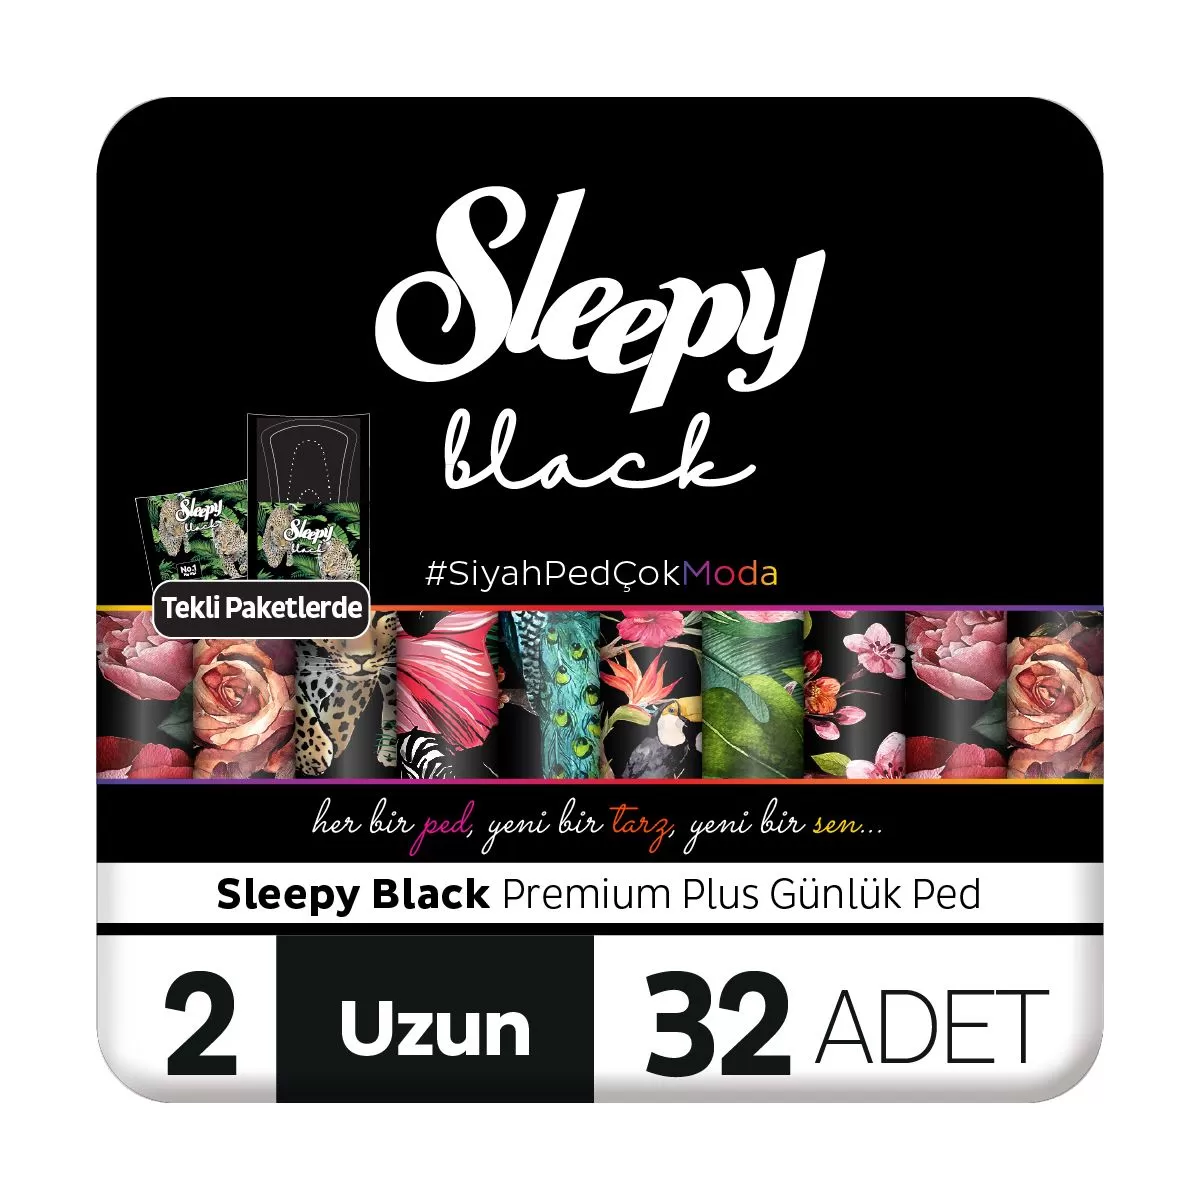 Sleepy Black Premium Plus Günlük Ped Uzun 32 Adet Ped